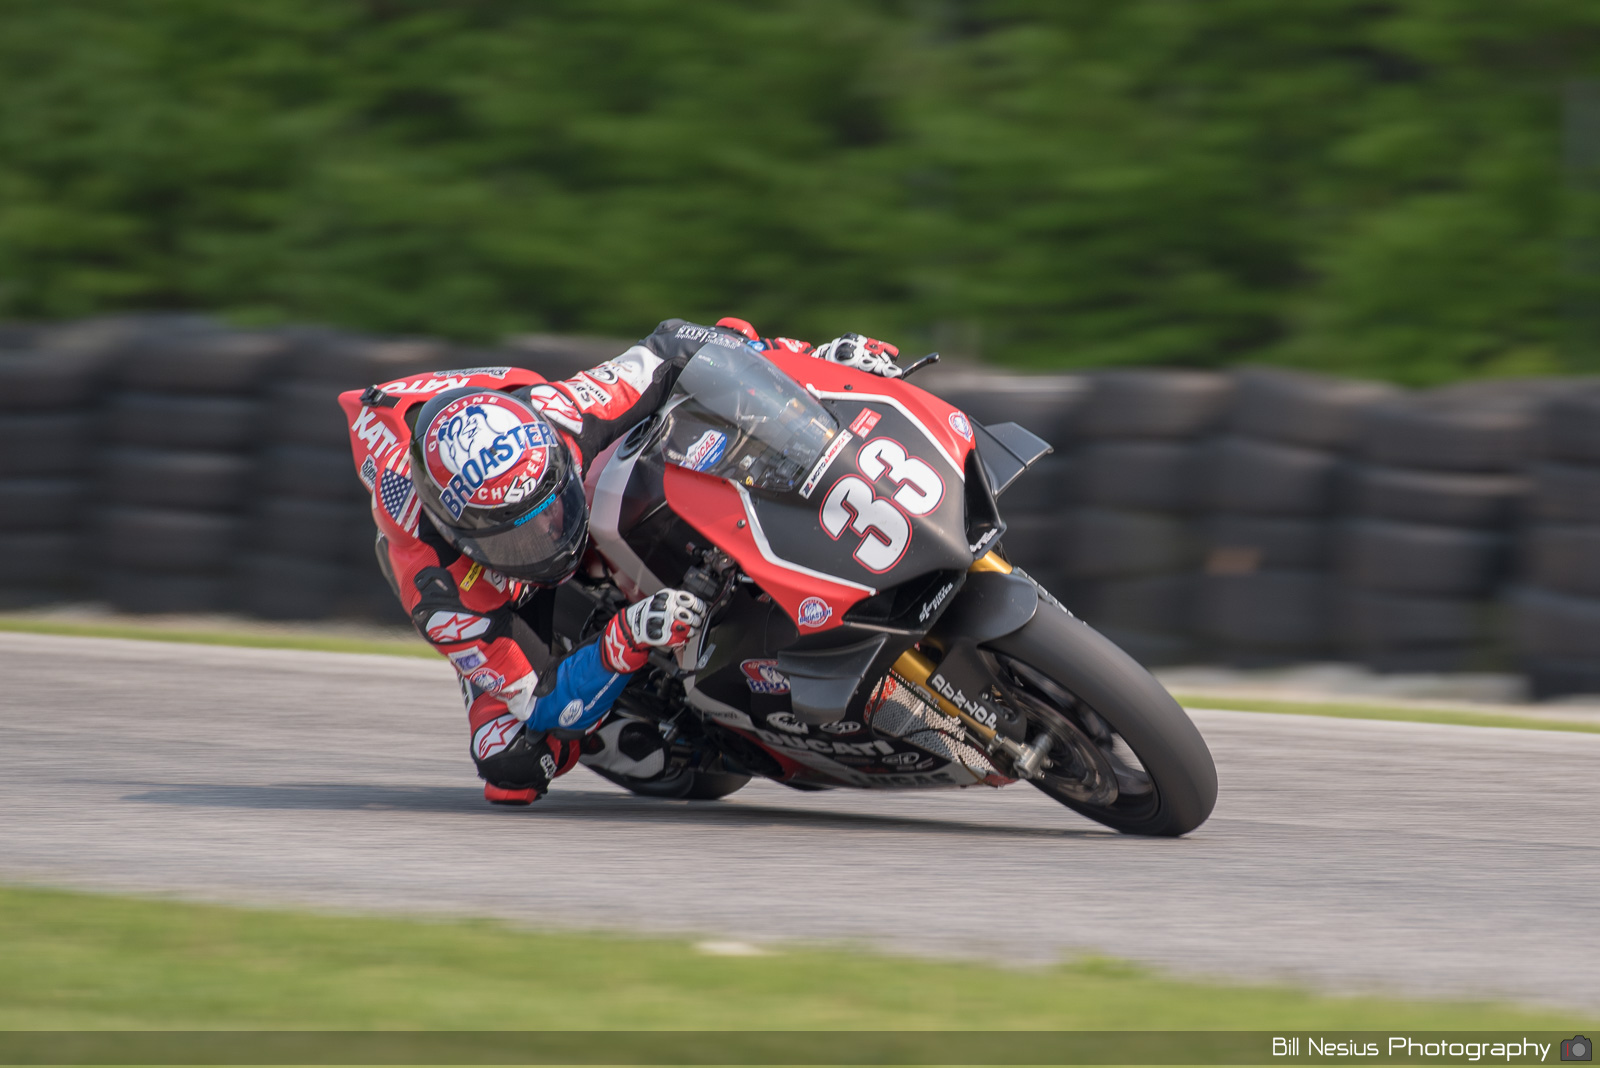 Kyle Wyman on the Number 33 Kyle Wyman Racing Ducati Panigale V4R / DSC_8395 / 1